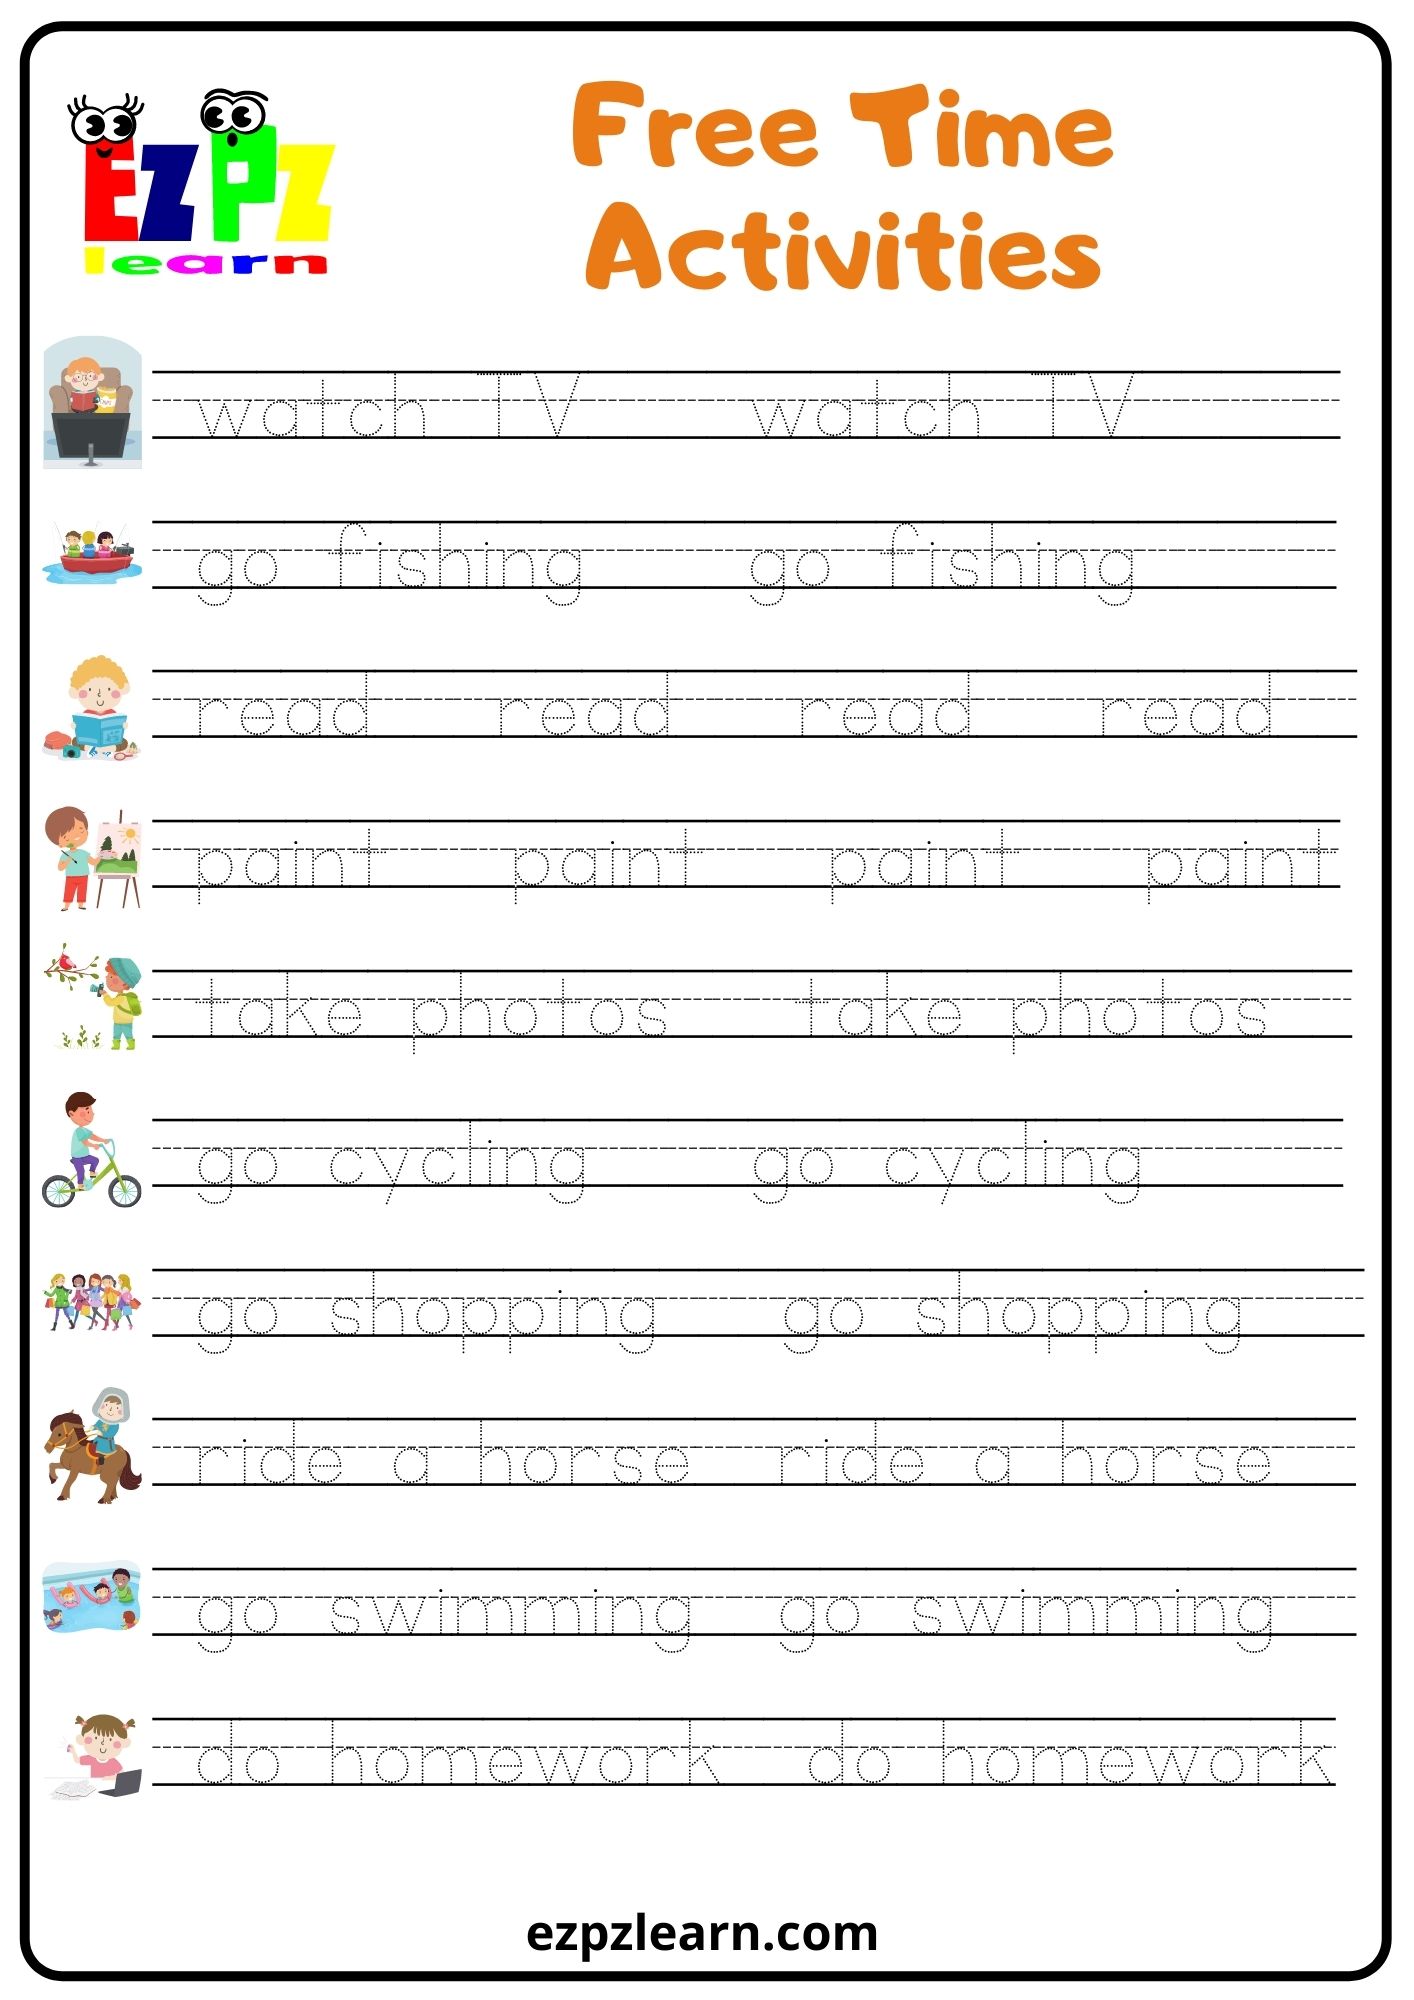 English Year 2 Free Time Activities Worksheet Free Time Worksheet For Grade 2 Isla Rose03Watts